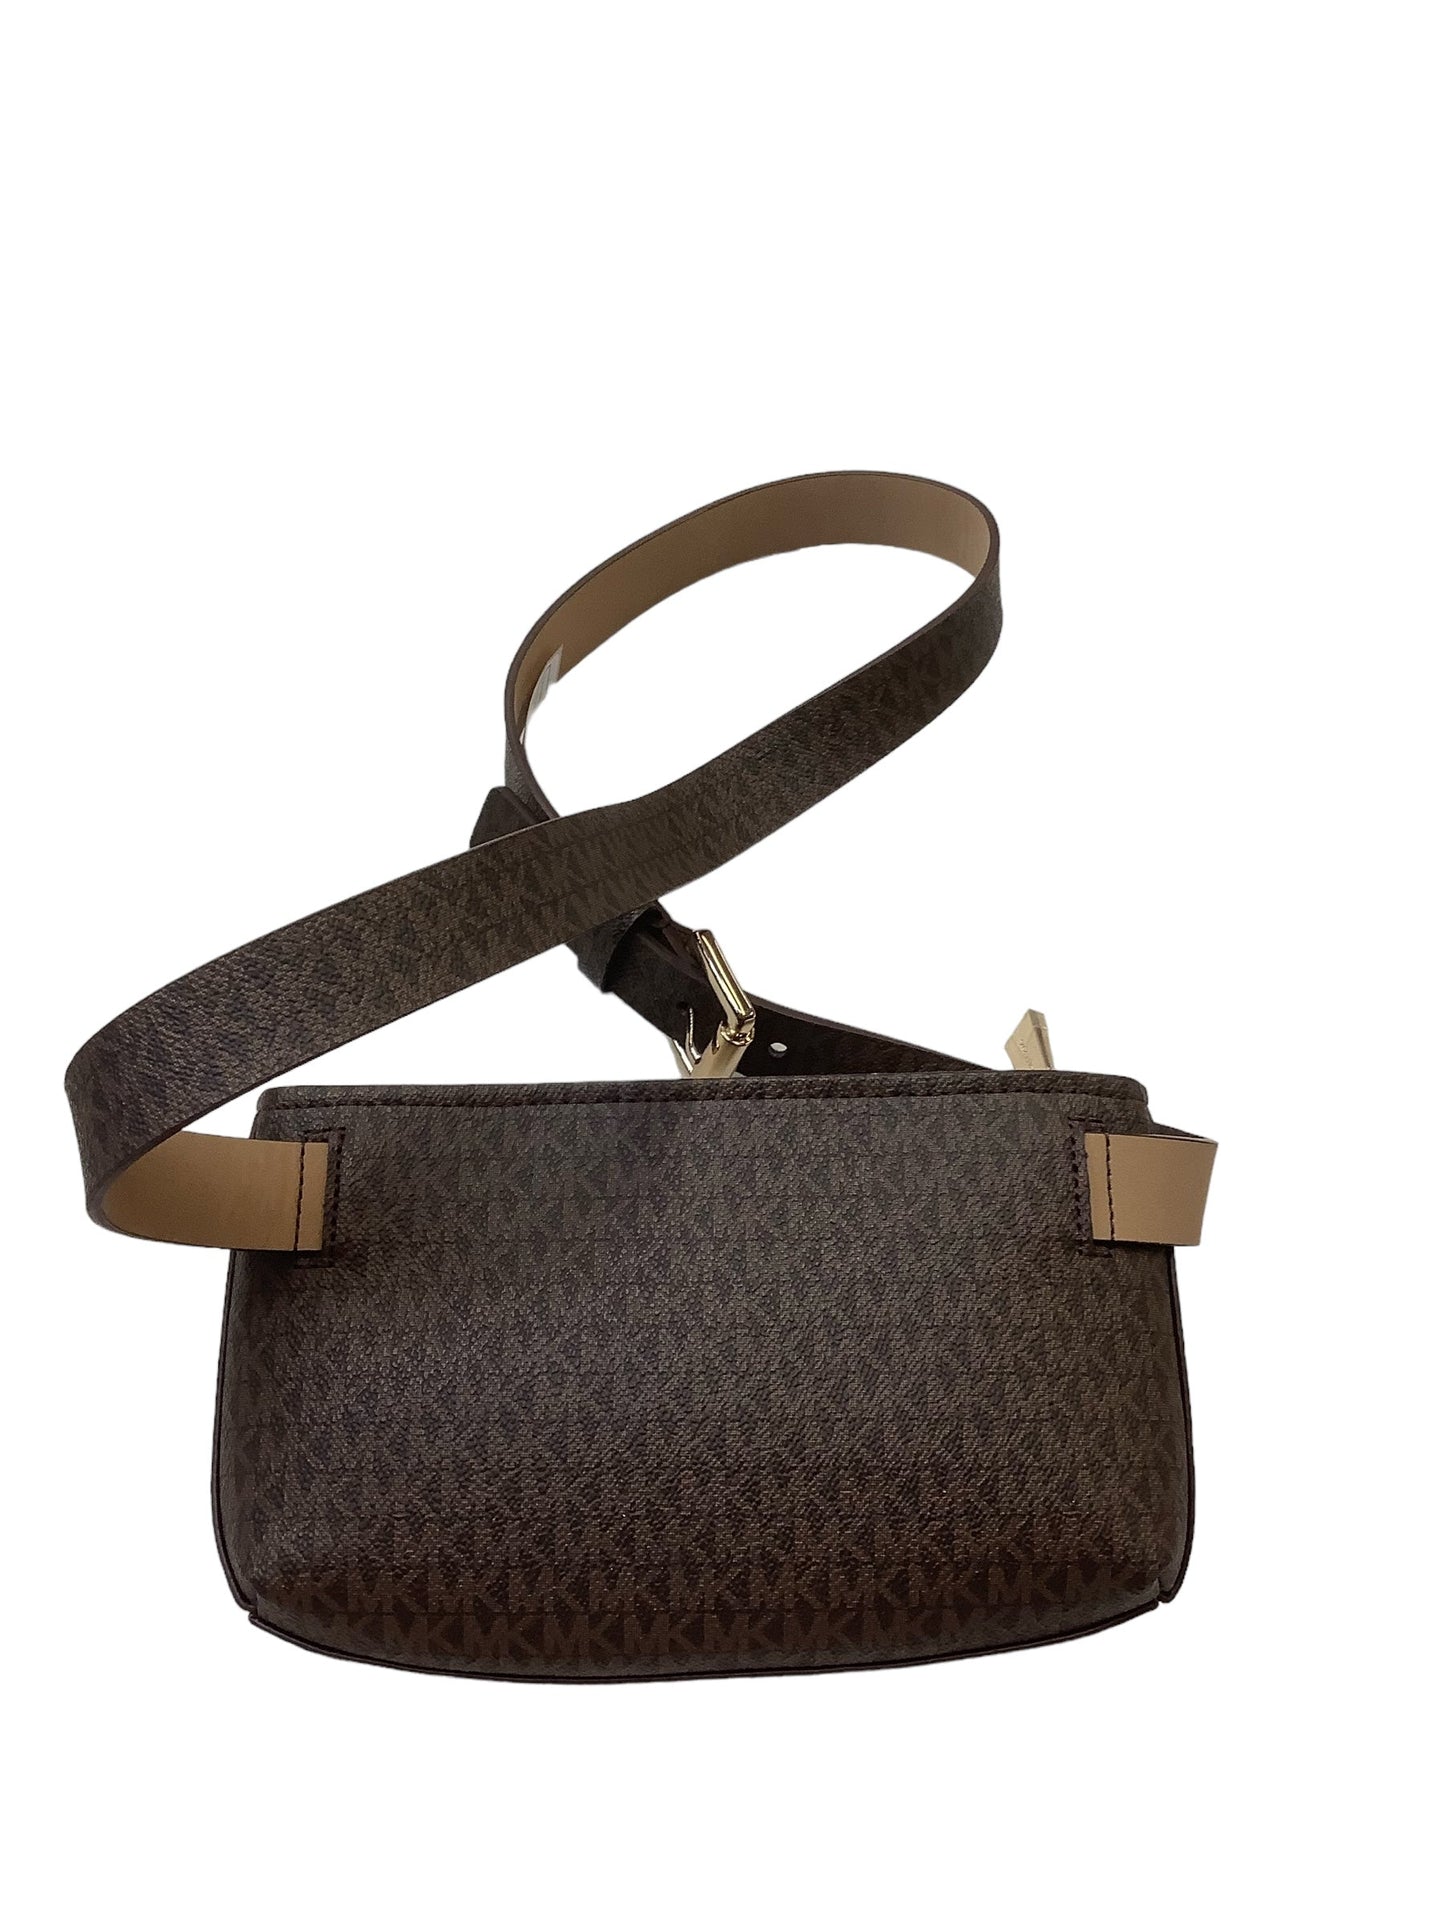 Belt Bag Designer Michael Kors, Size Medium